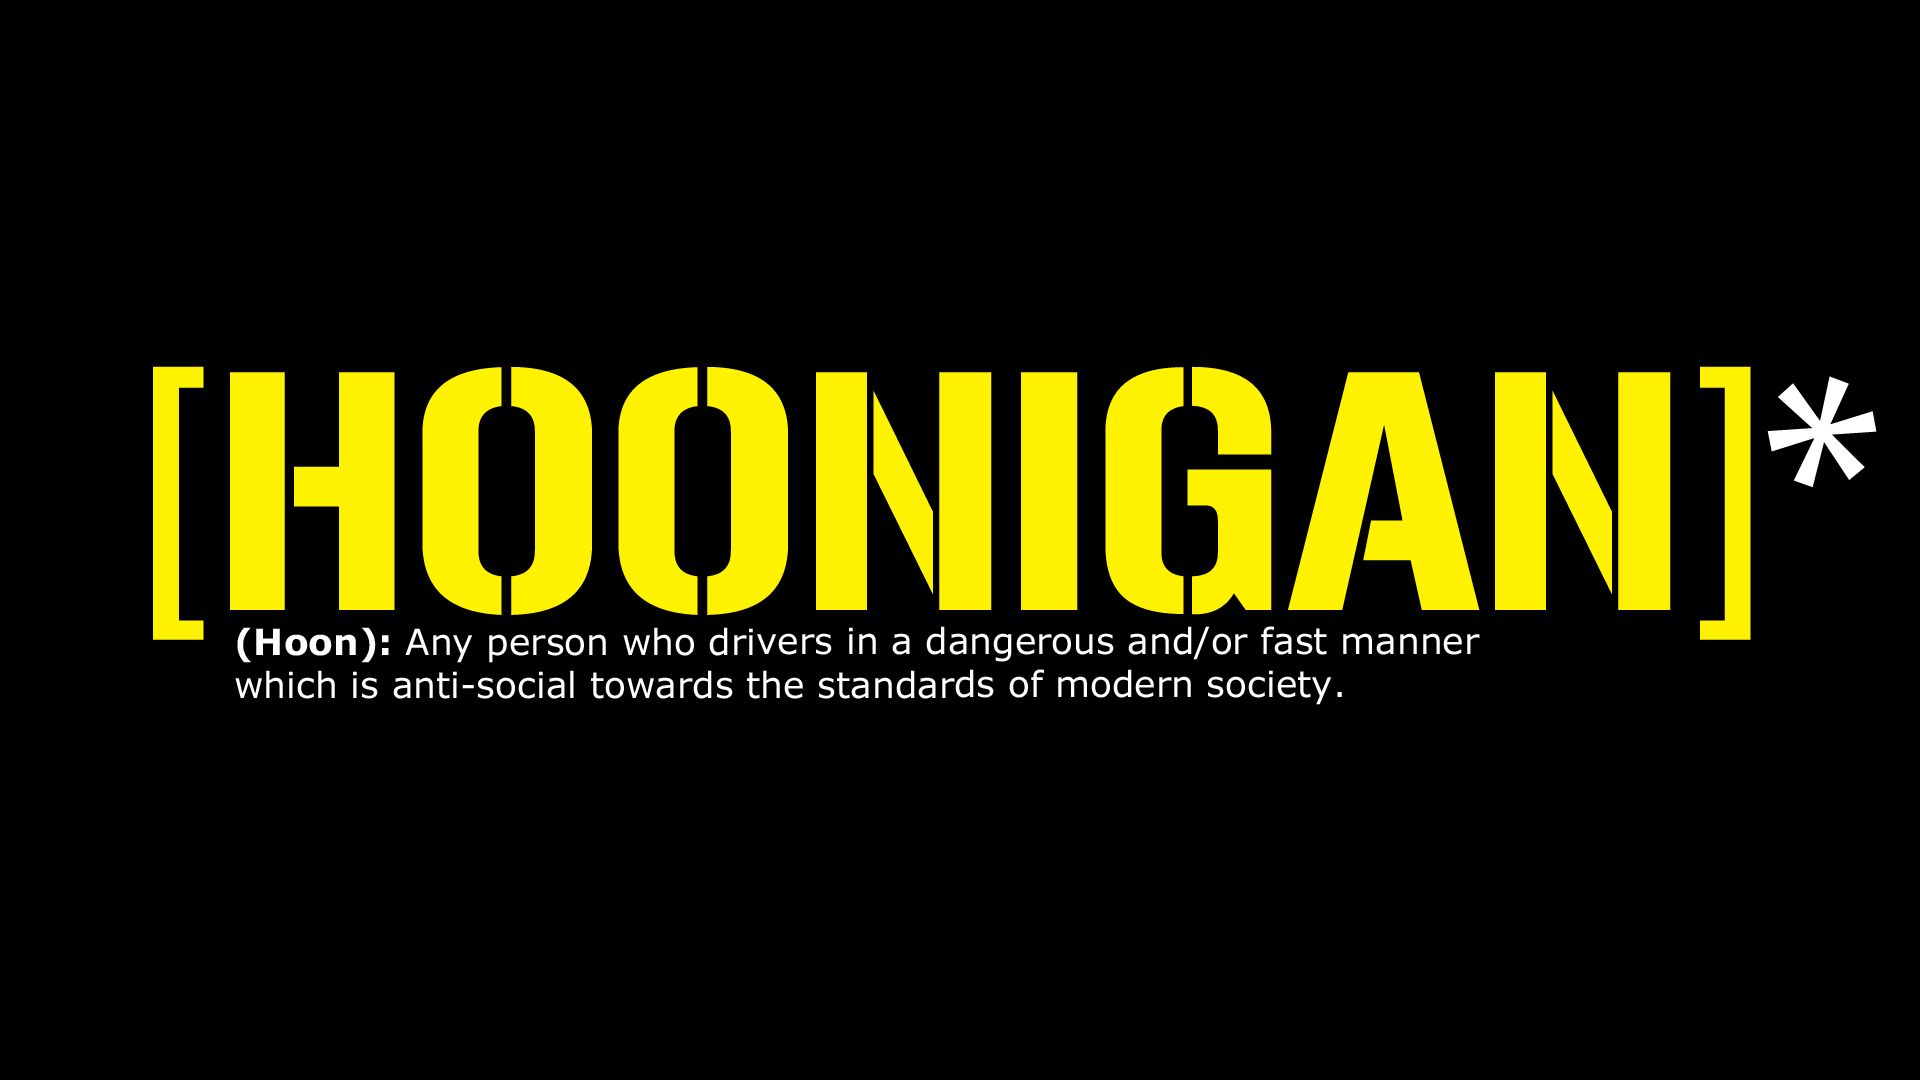 Amazon.com: Hoonigan Galaxy Censor BAR Sticker (10